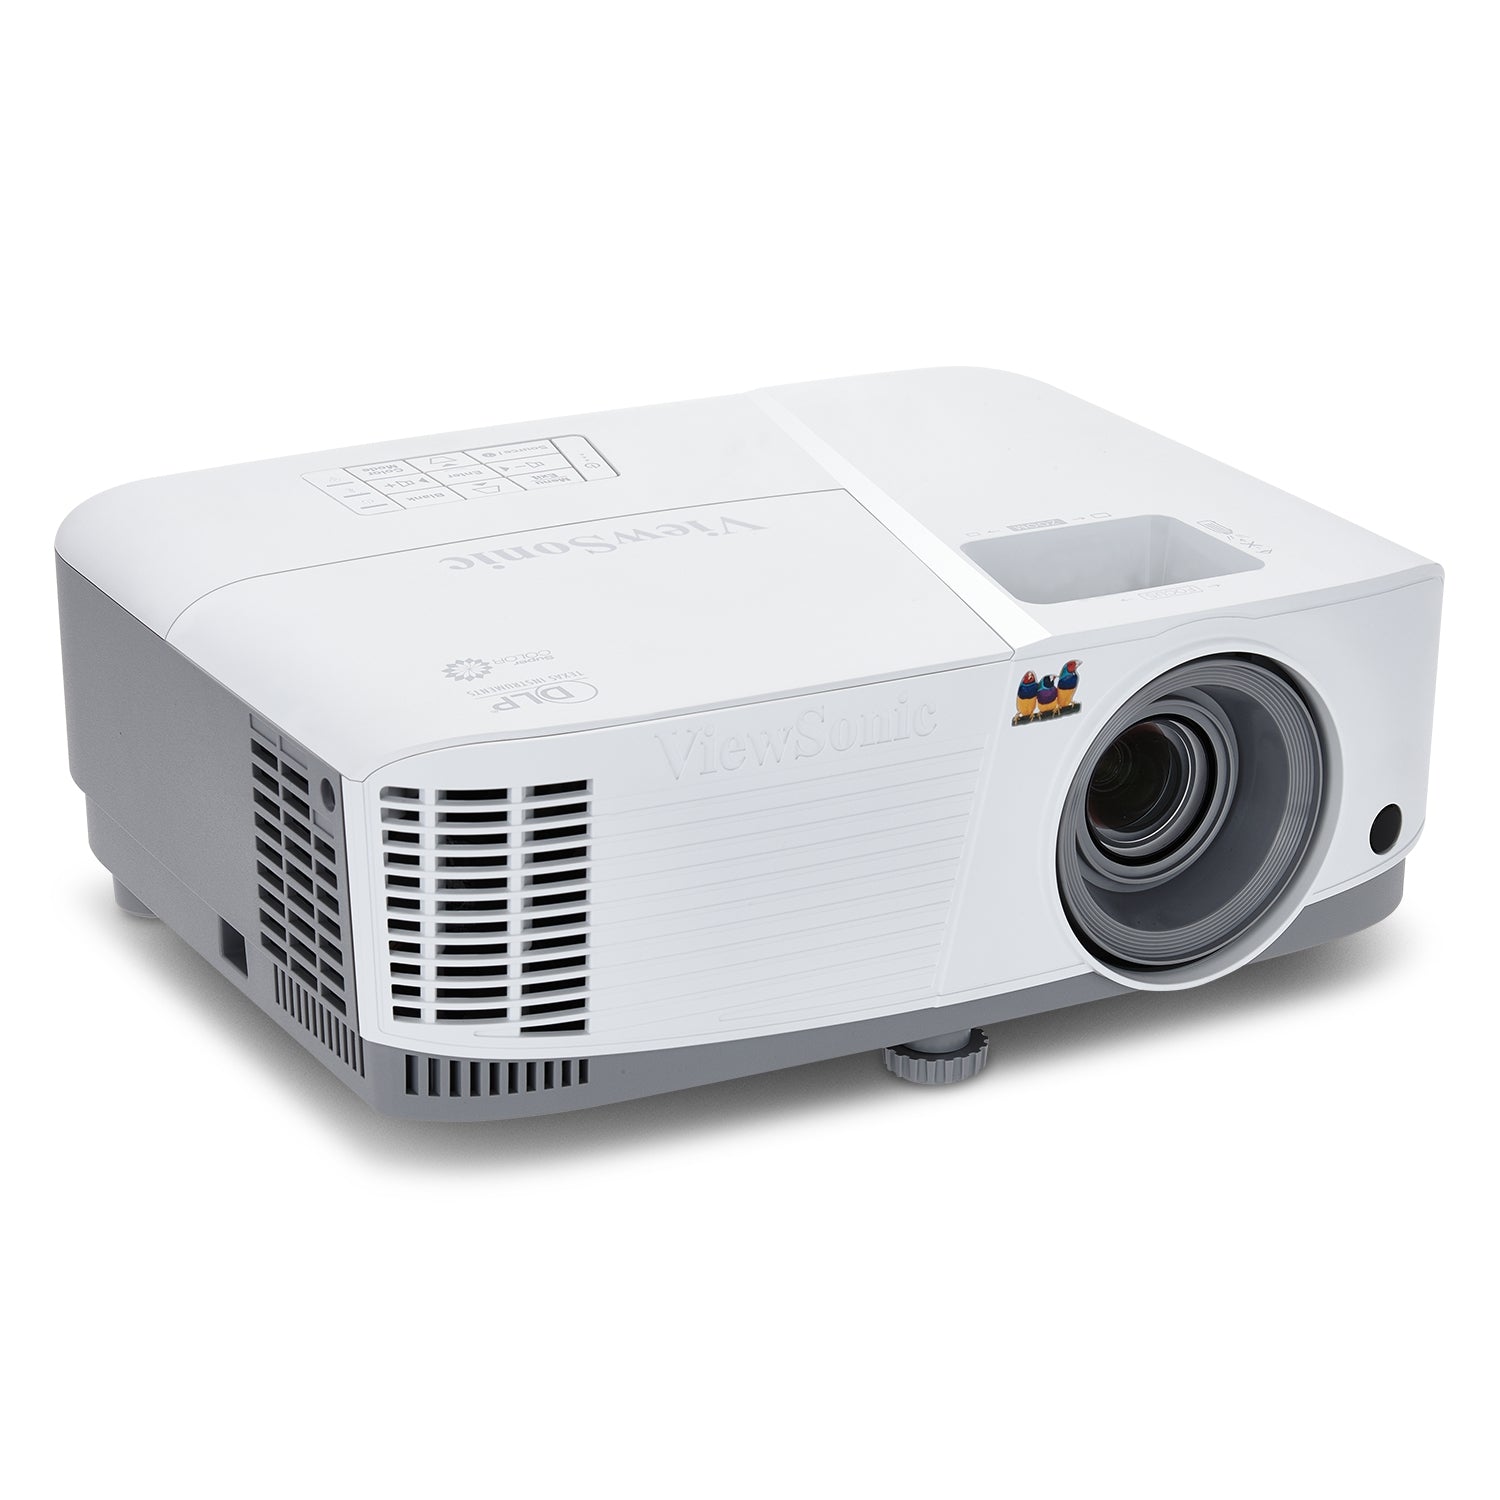 Videoproyector Viewsonic Dlp Pa503S Svga/3800 Lumens/Vga/Hdmi/15000 Horas/Tiro Normal